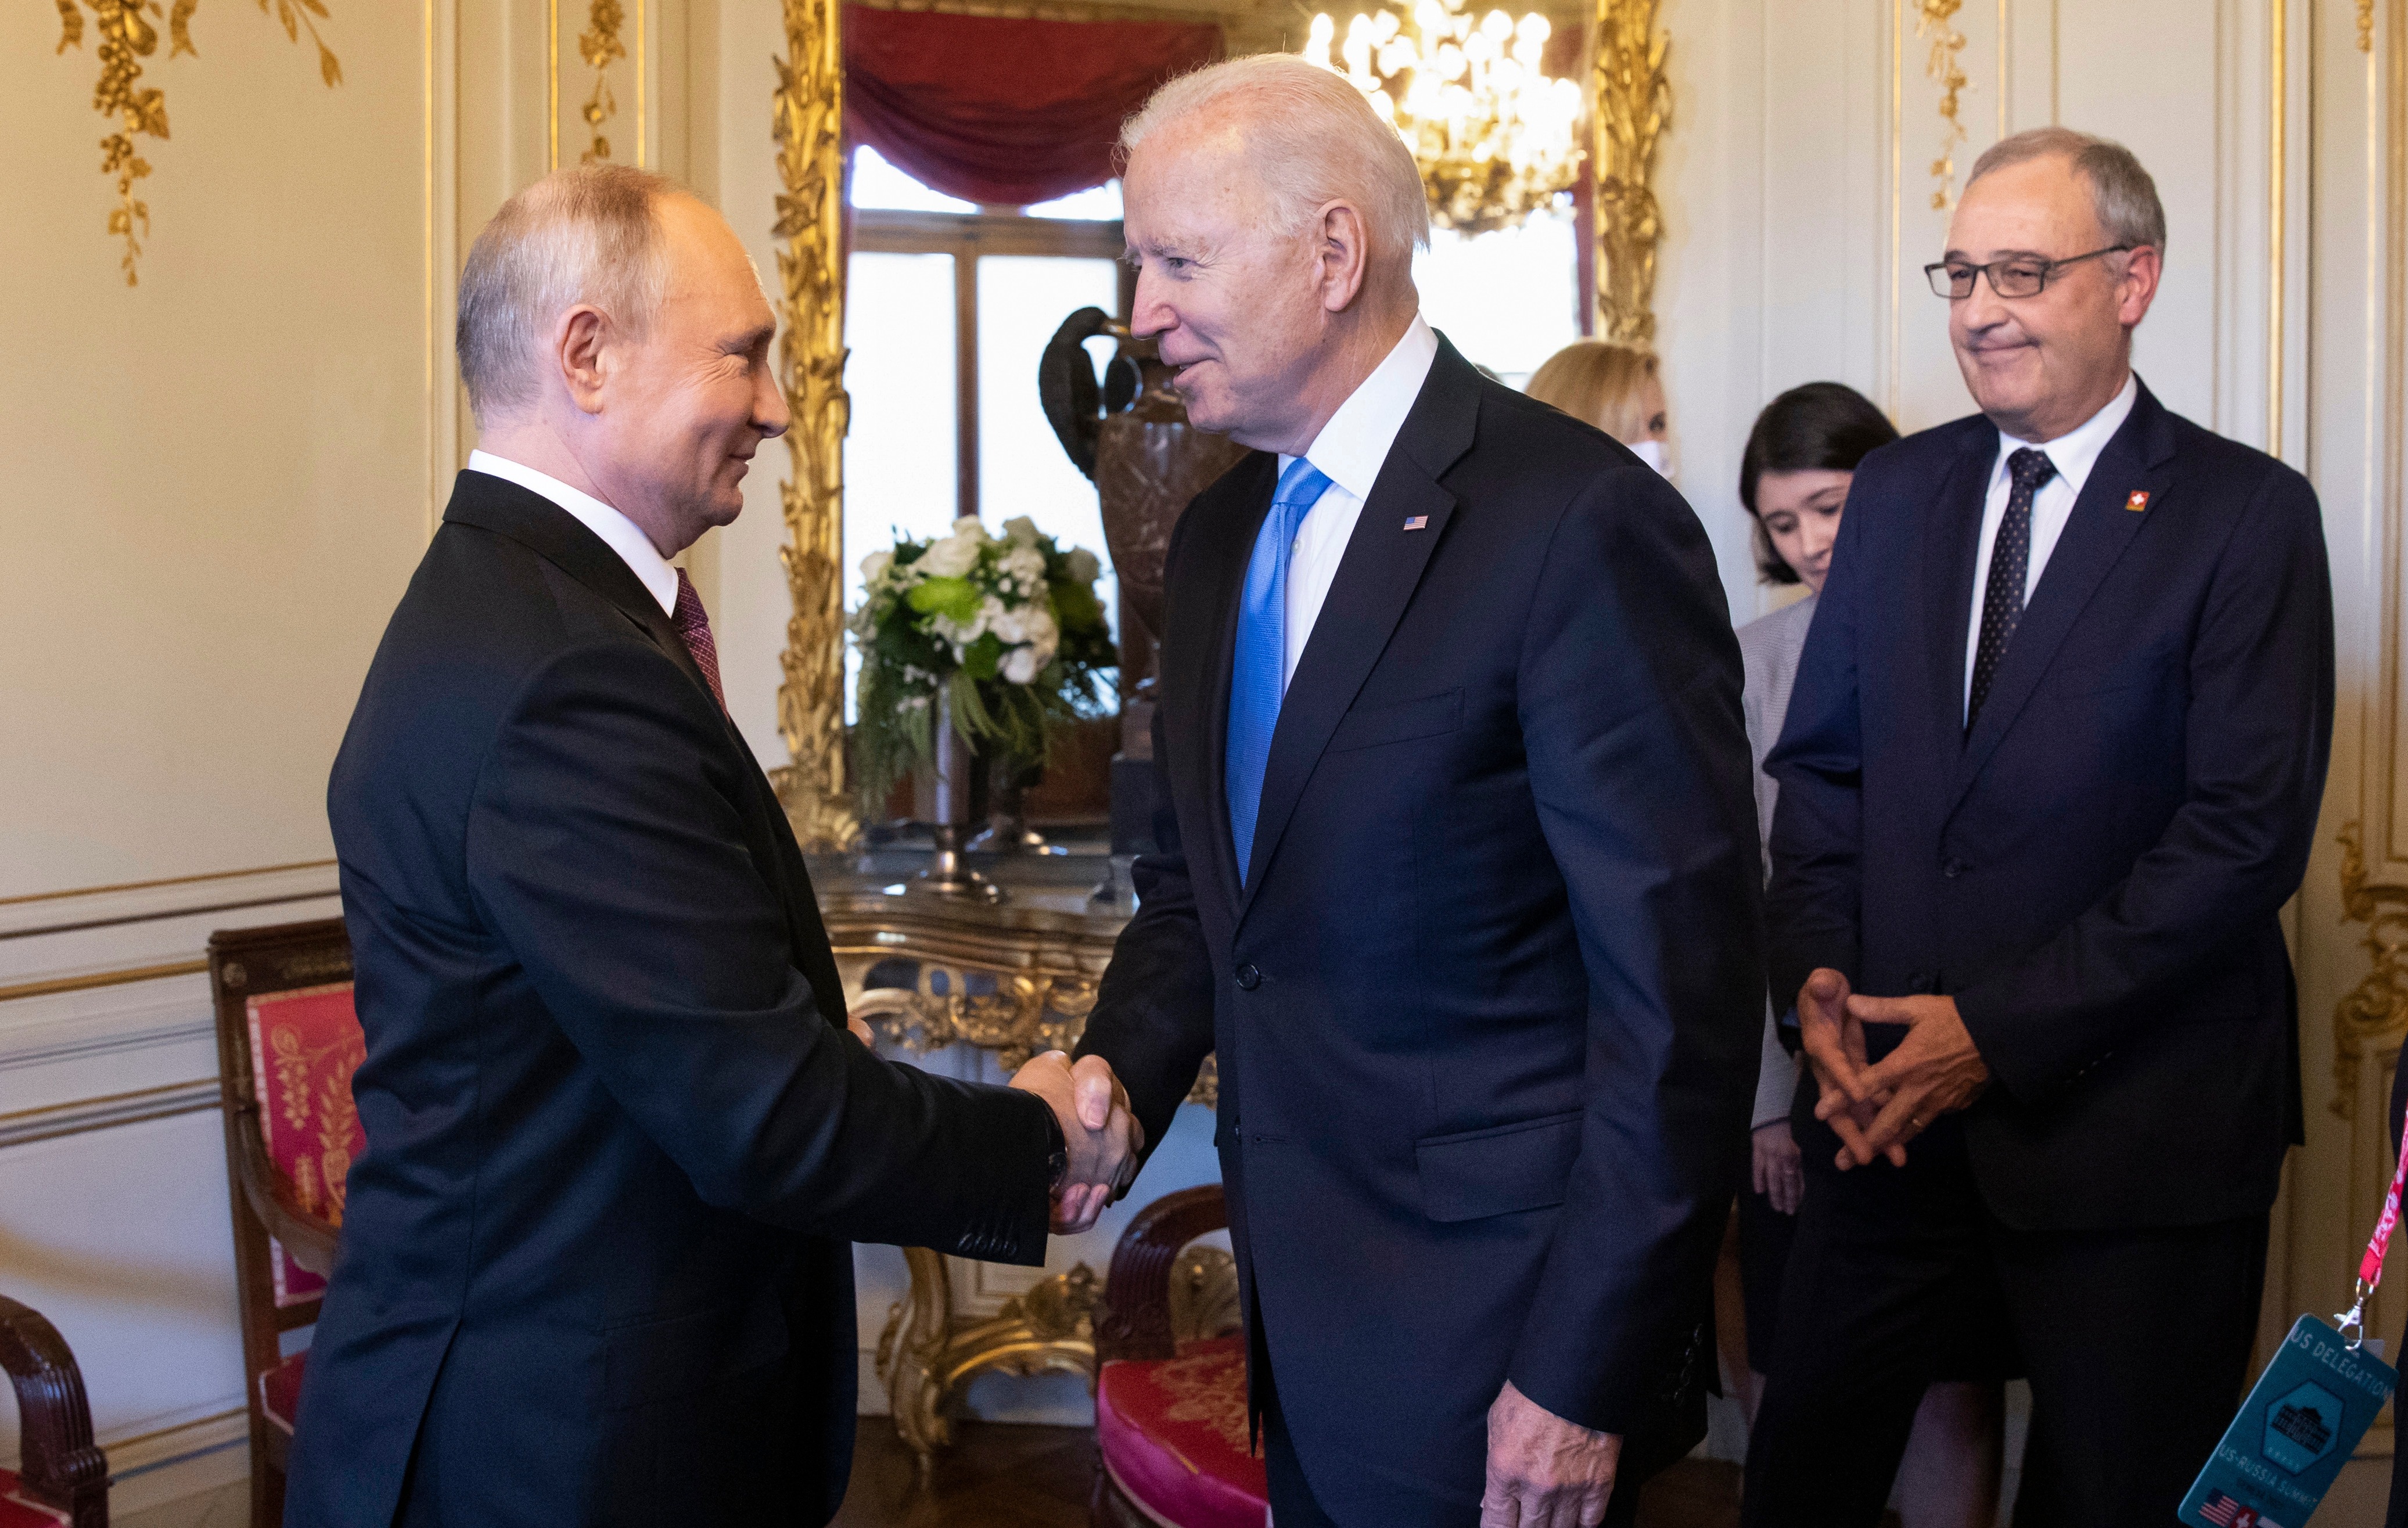 Joe Biden prepares to confront Vladimir Putin over Ukraine